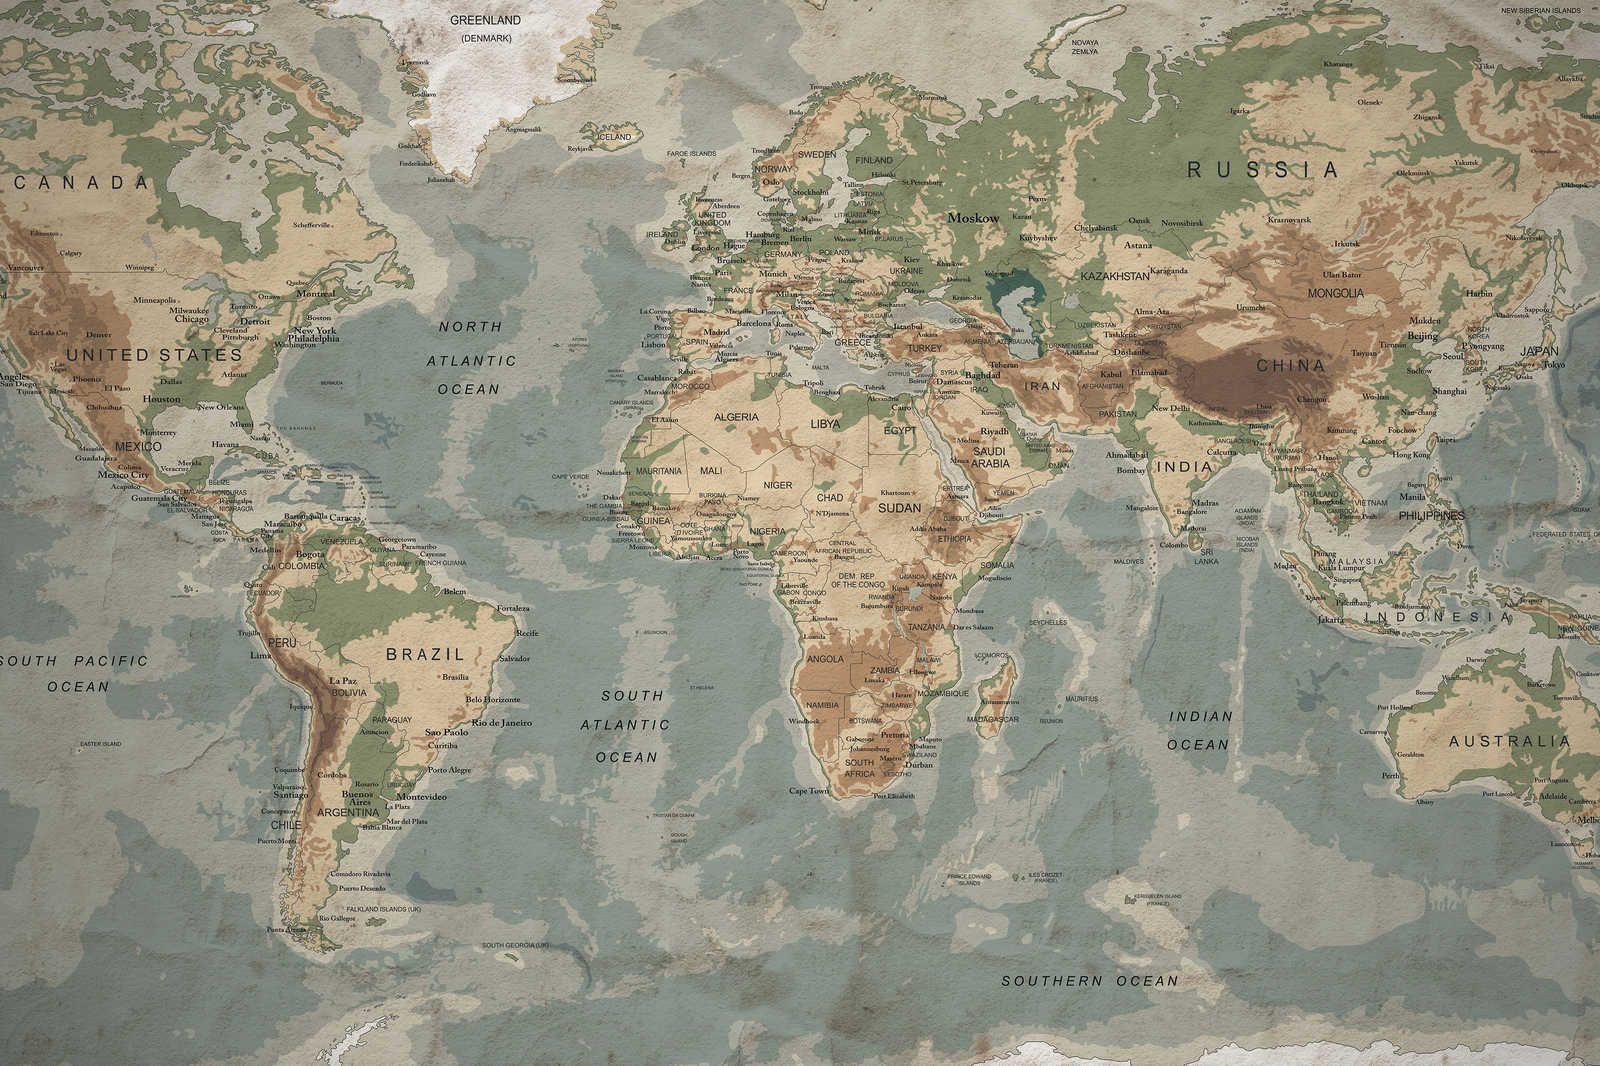             Retro Canvas Painting World Map with Typographic Design - 1.20 m x 0.80 m
        